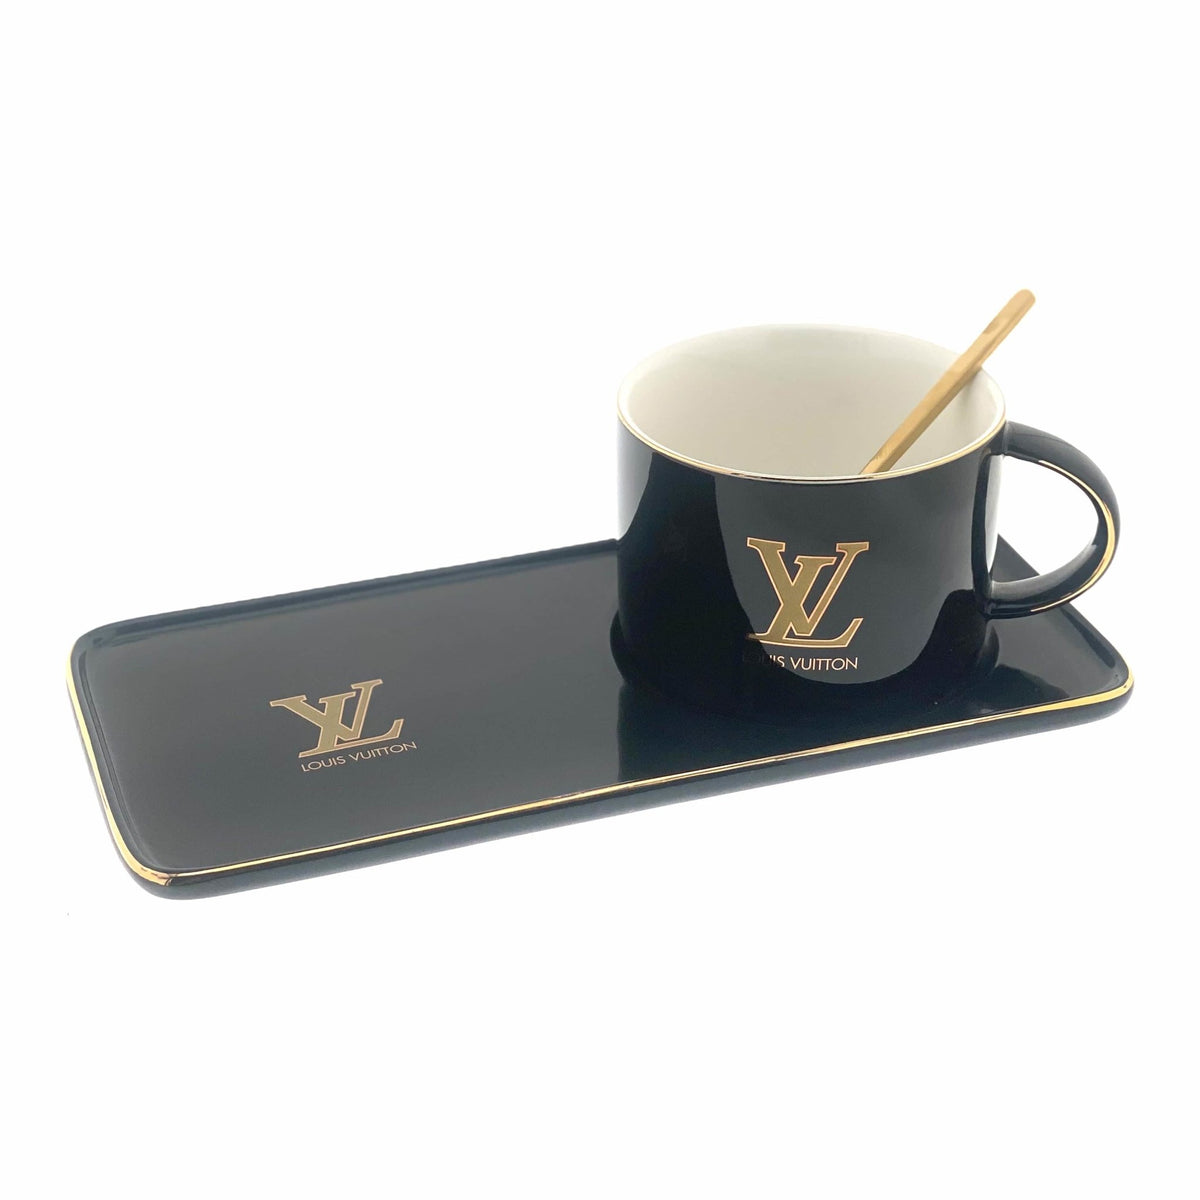 Louis Vuitton Coffee Tumbler 